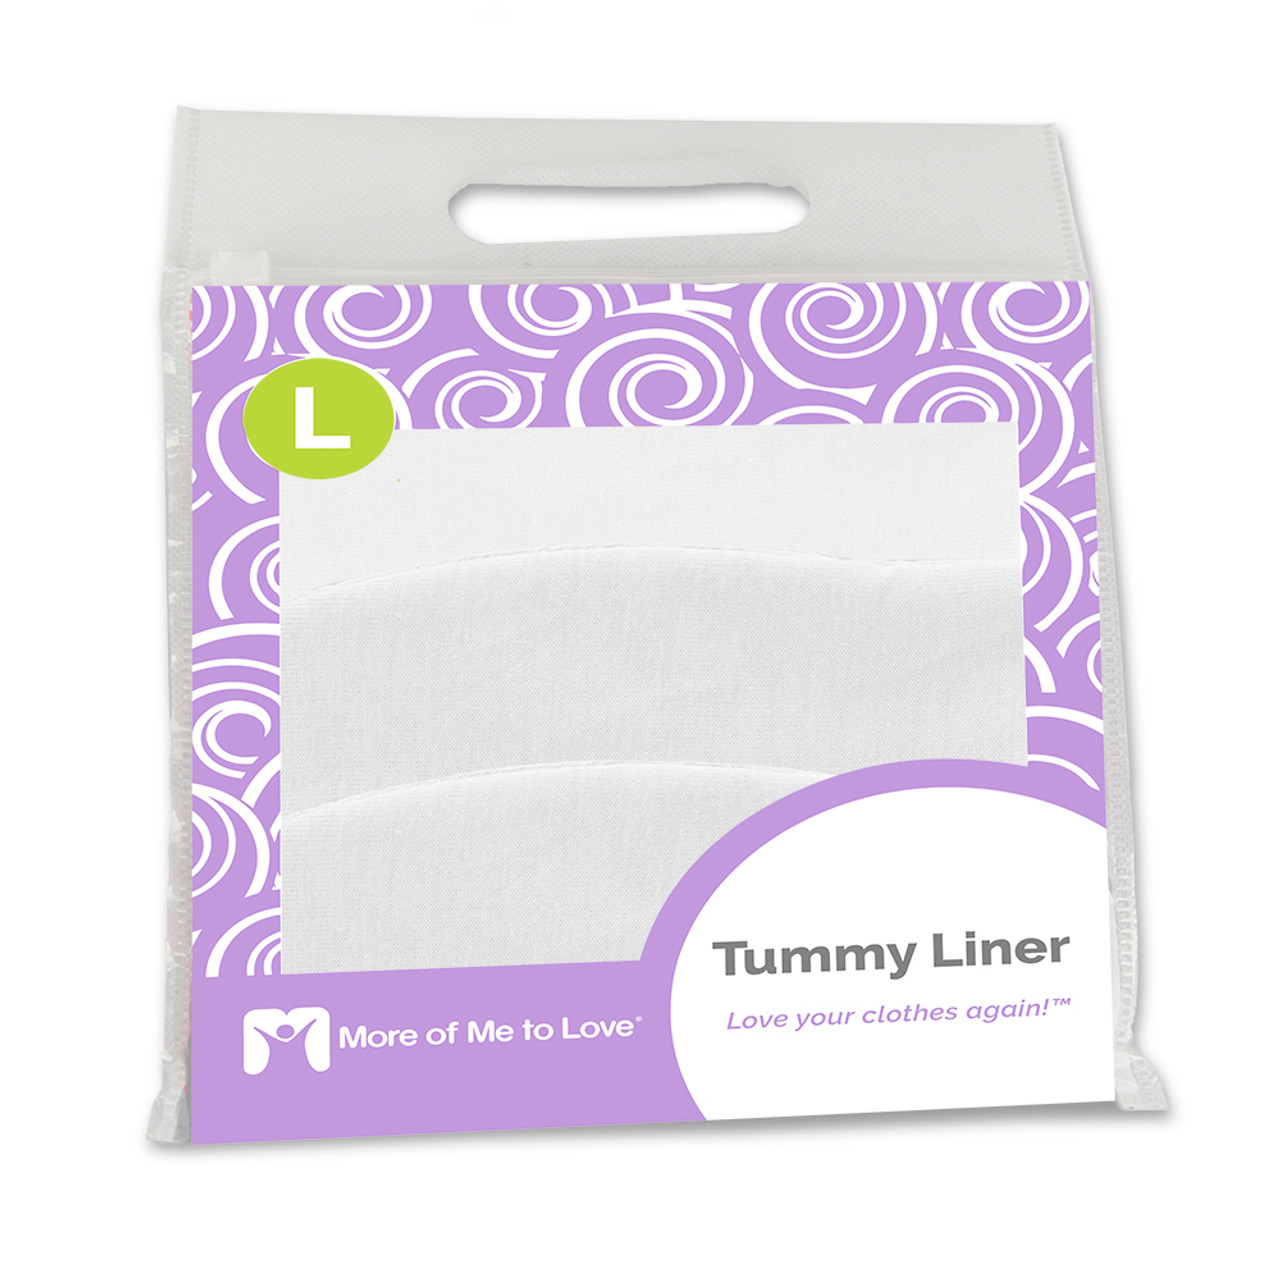 The Original Tummy Liner